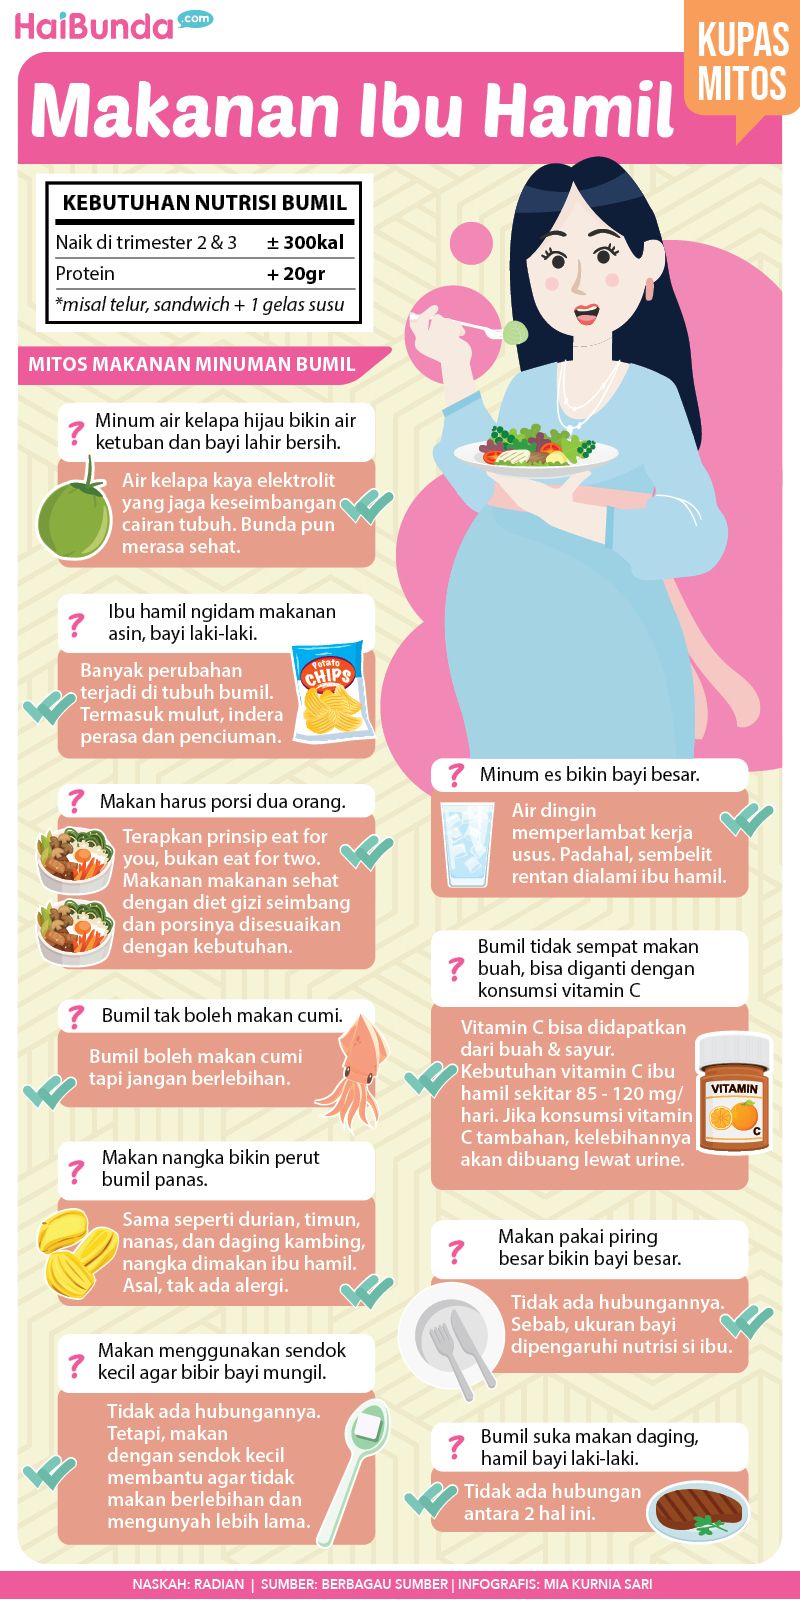 Infografis Mitos Makanan Ibu Hamil